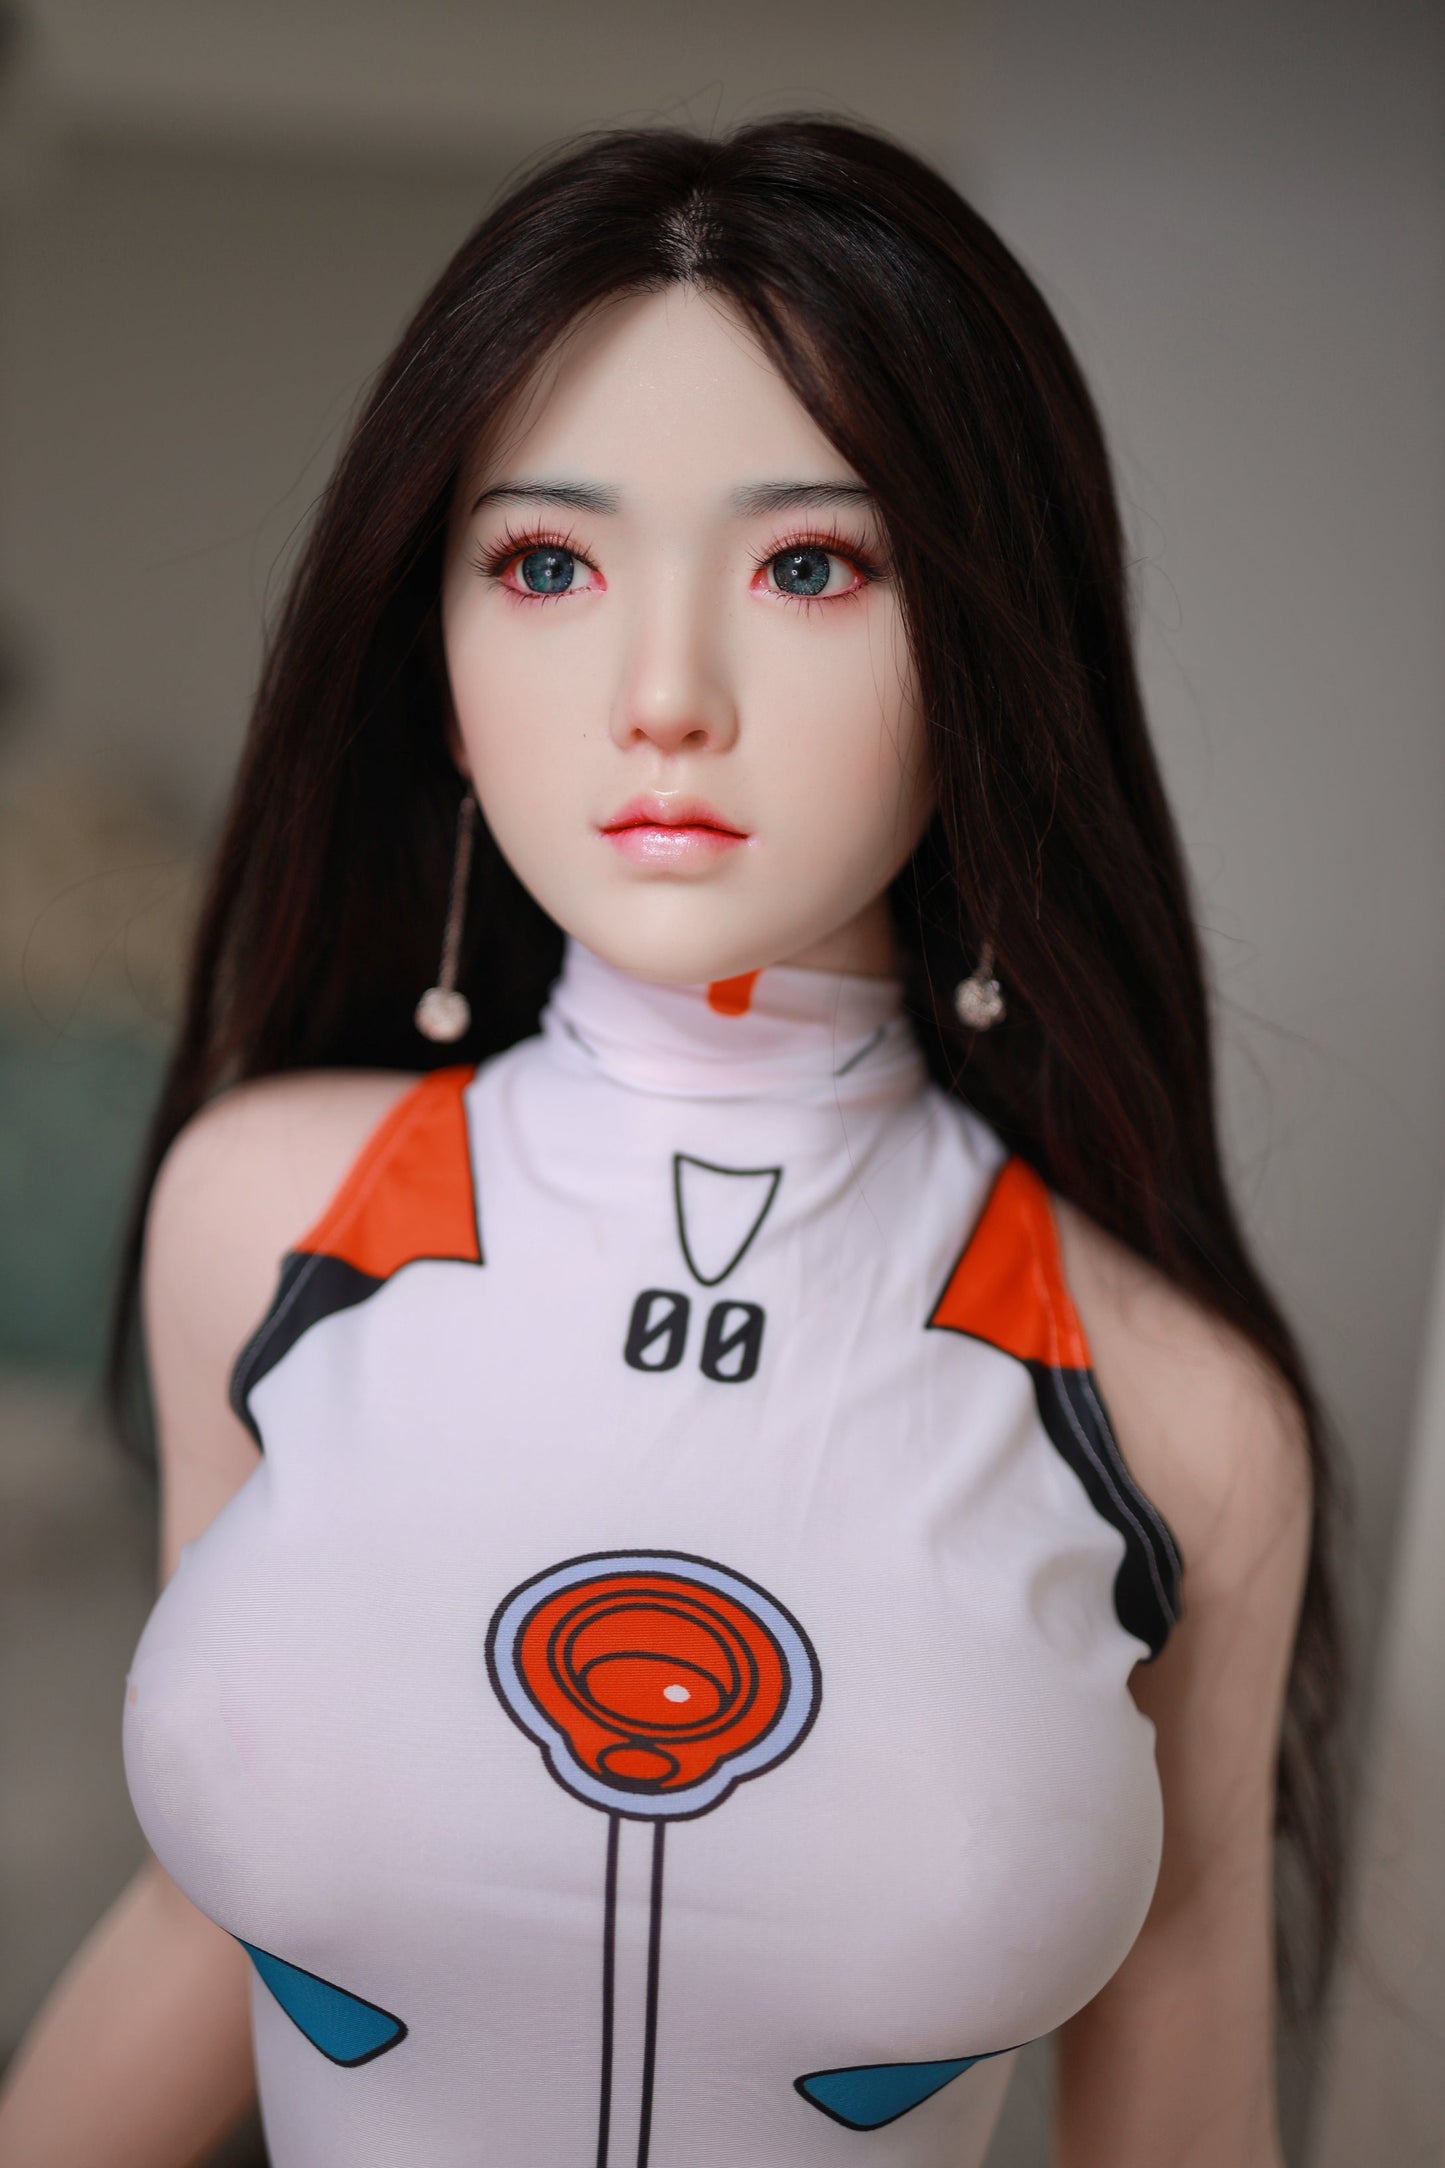 JY Doll 165cm B Cup - Head S43 - Silicone